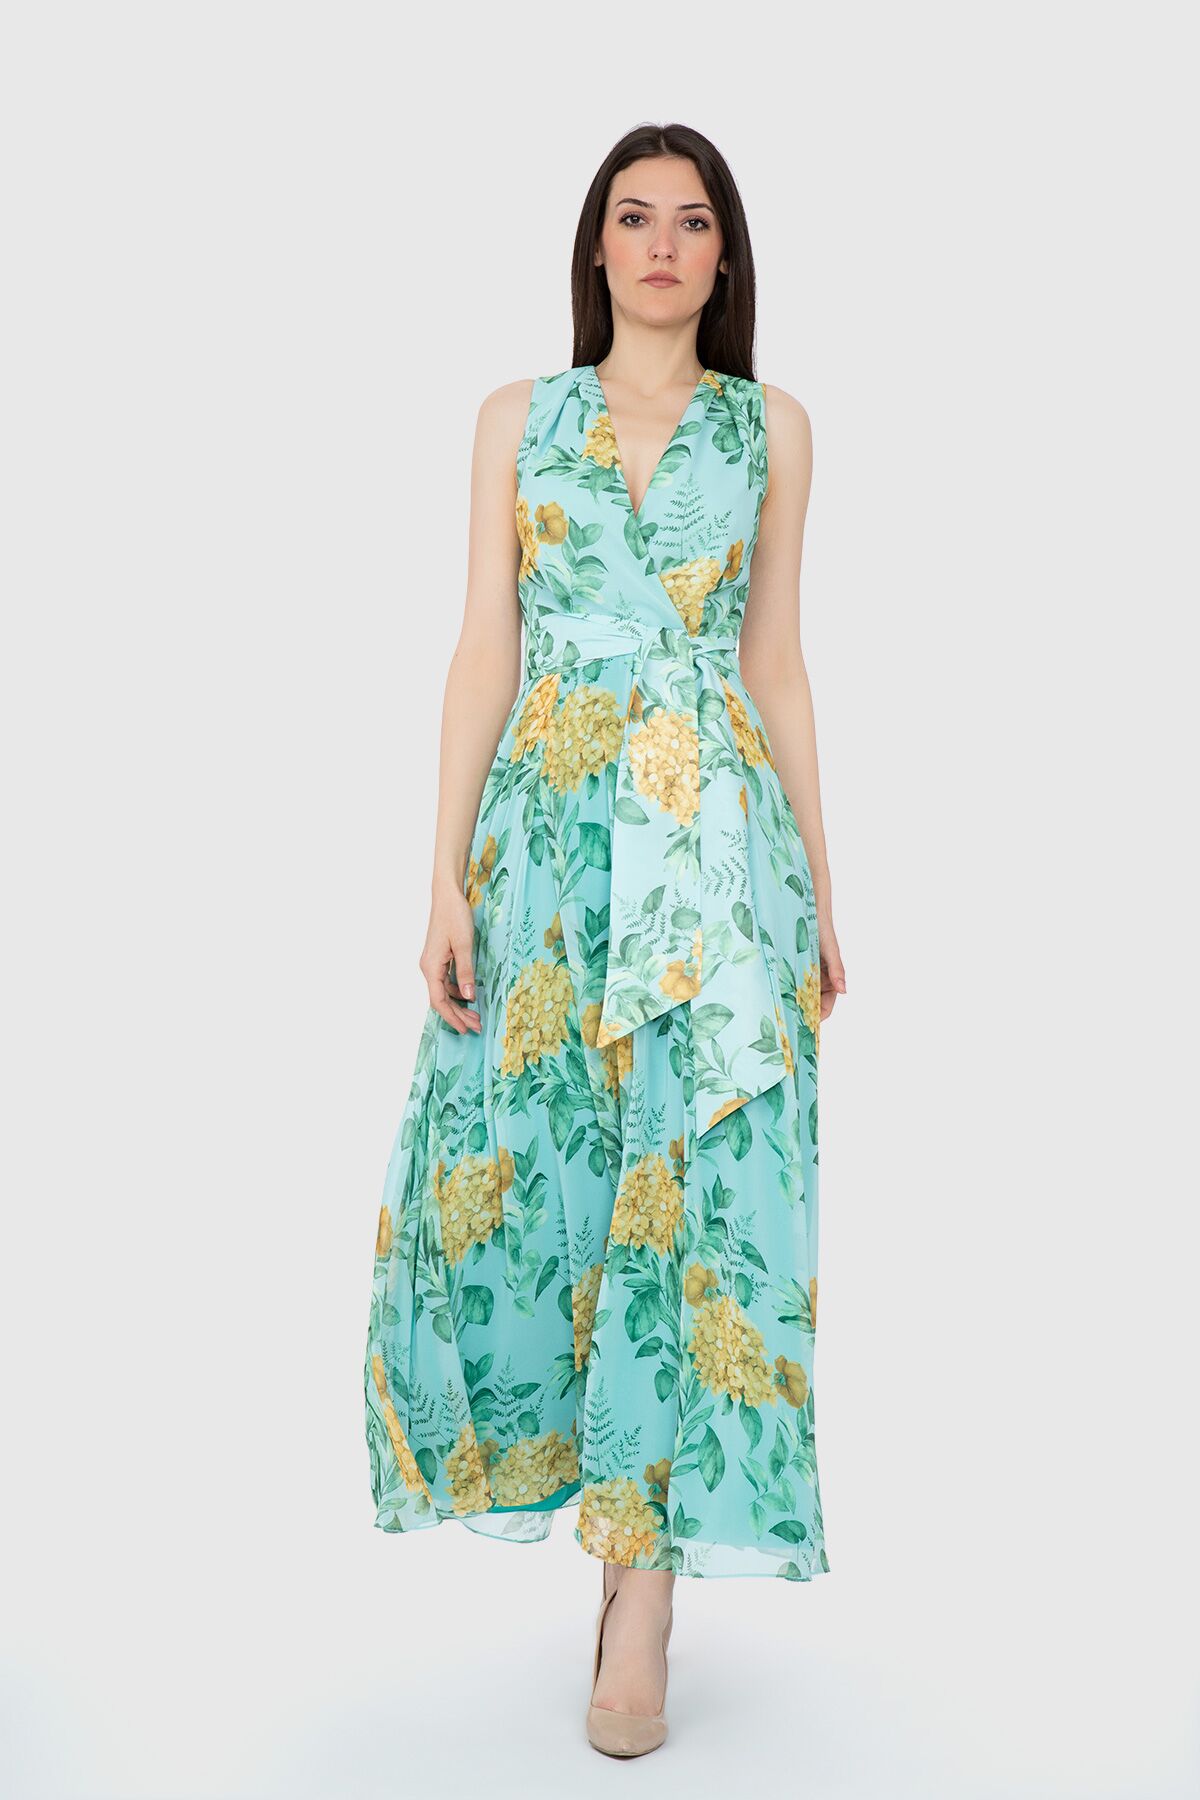 KIWE - Waist Belt Floral Pattern Zero Sleeve Dress